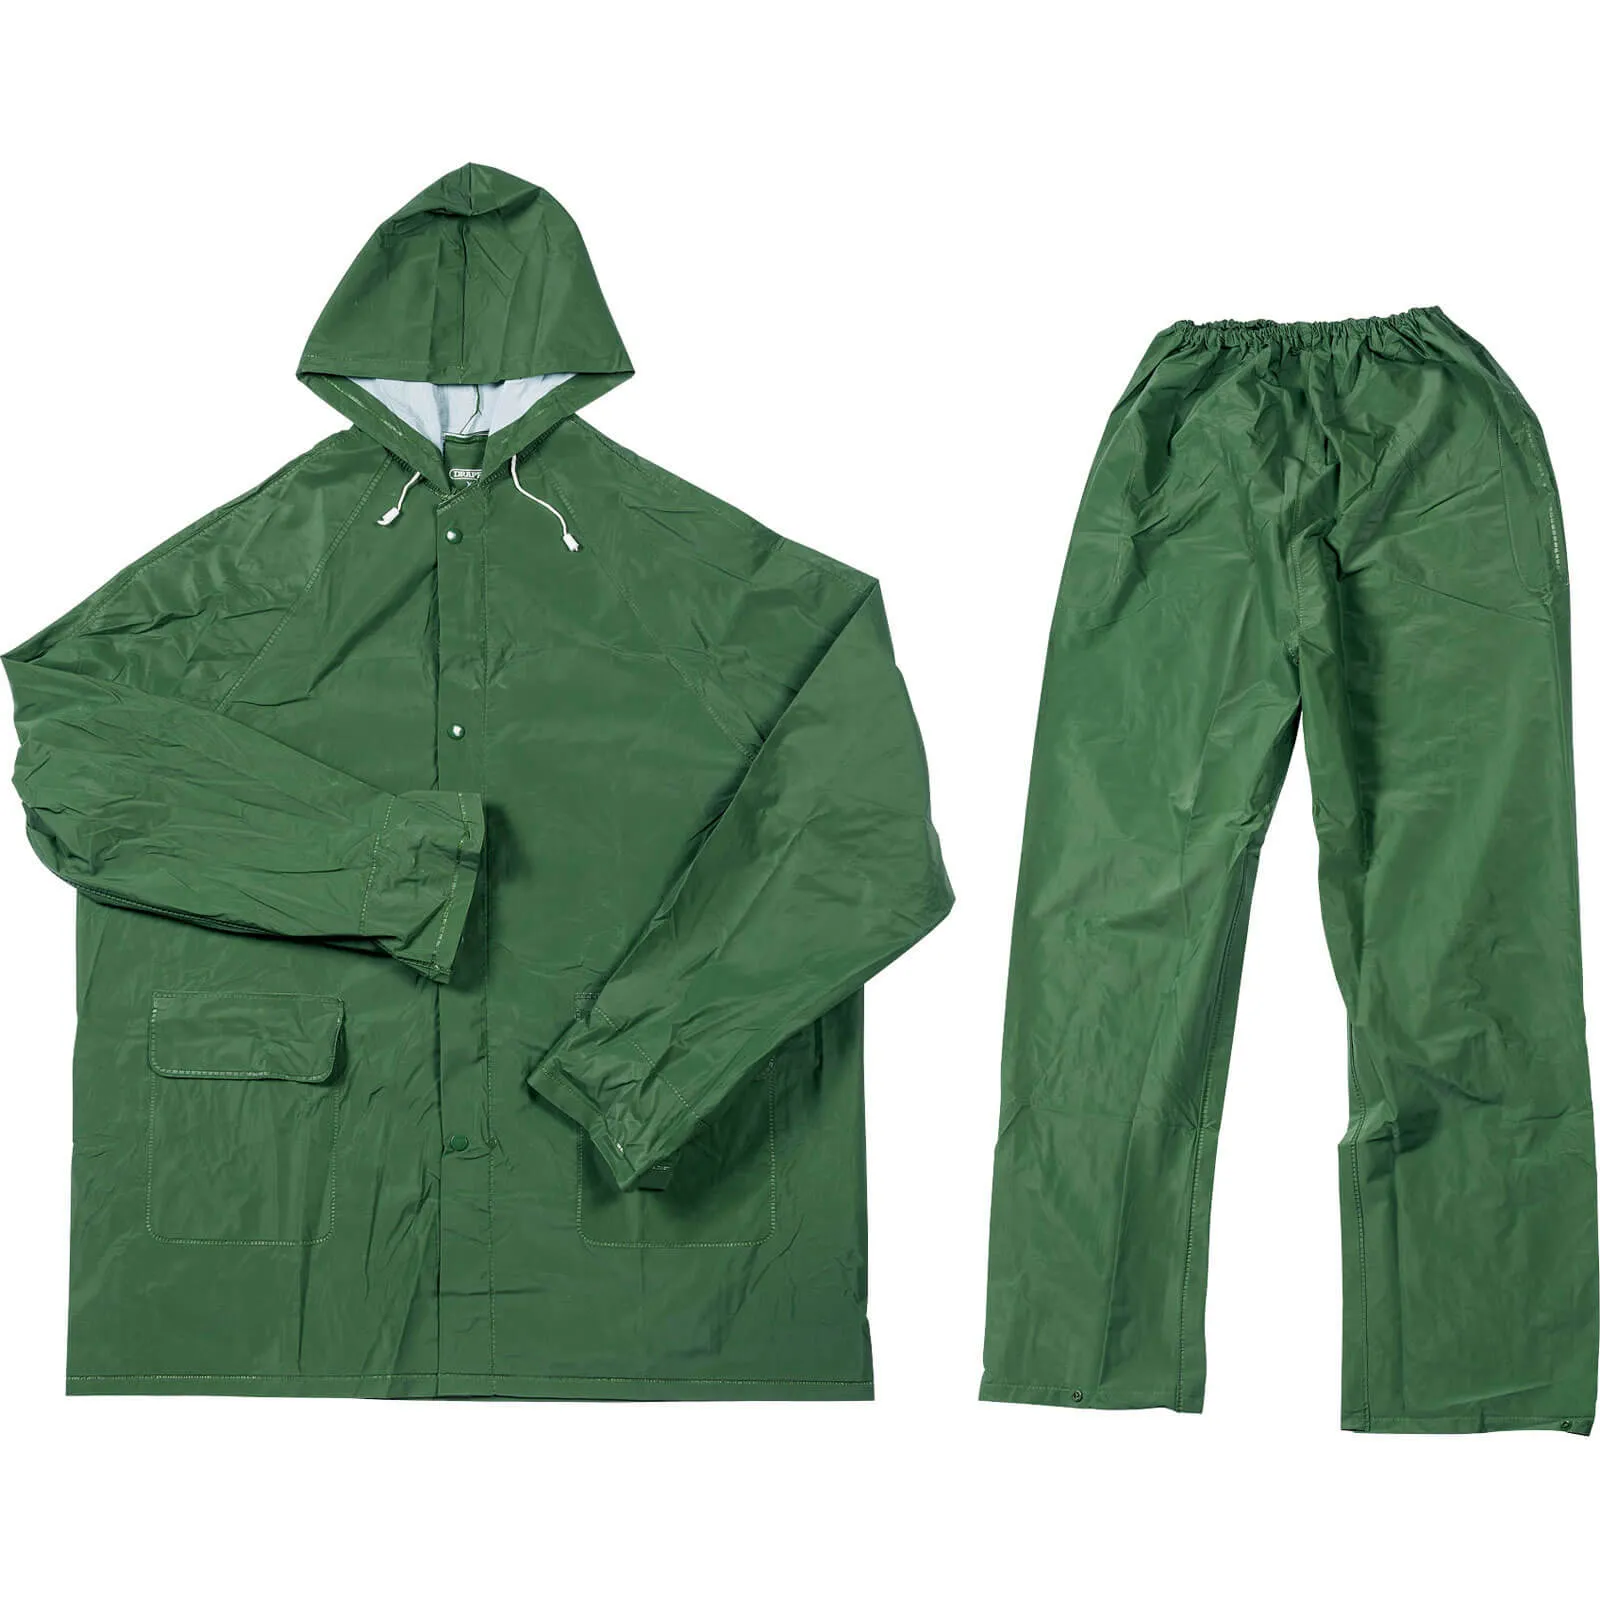 Draper 2 Piece Lightweight Rain Suit - Green, One Size